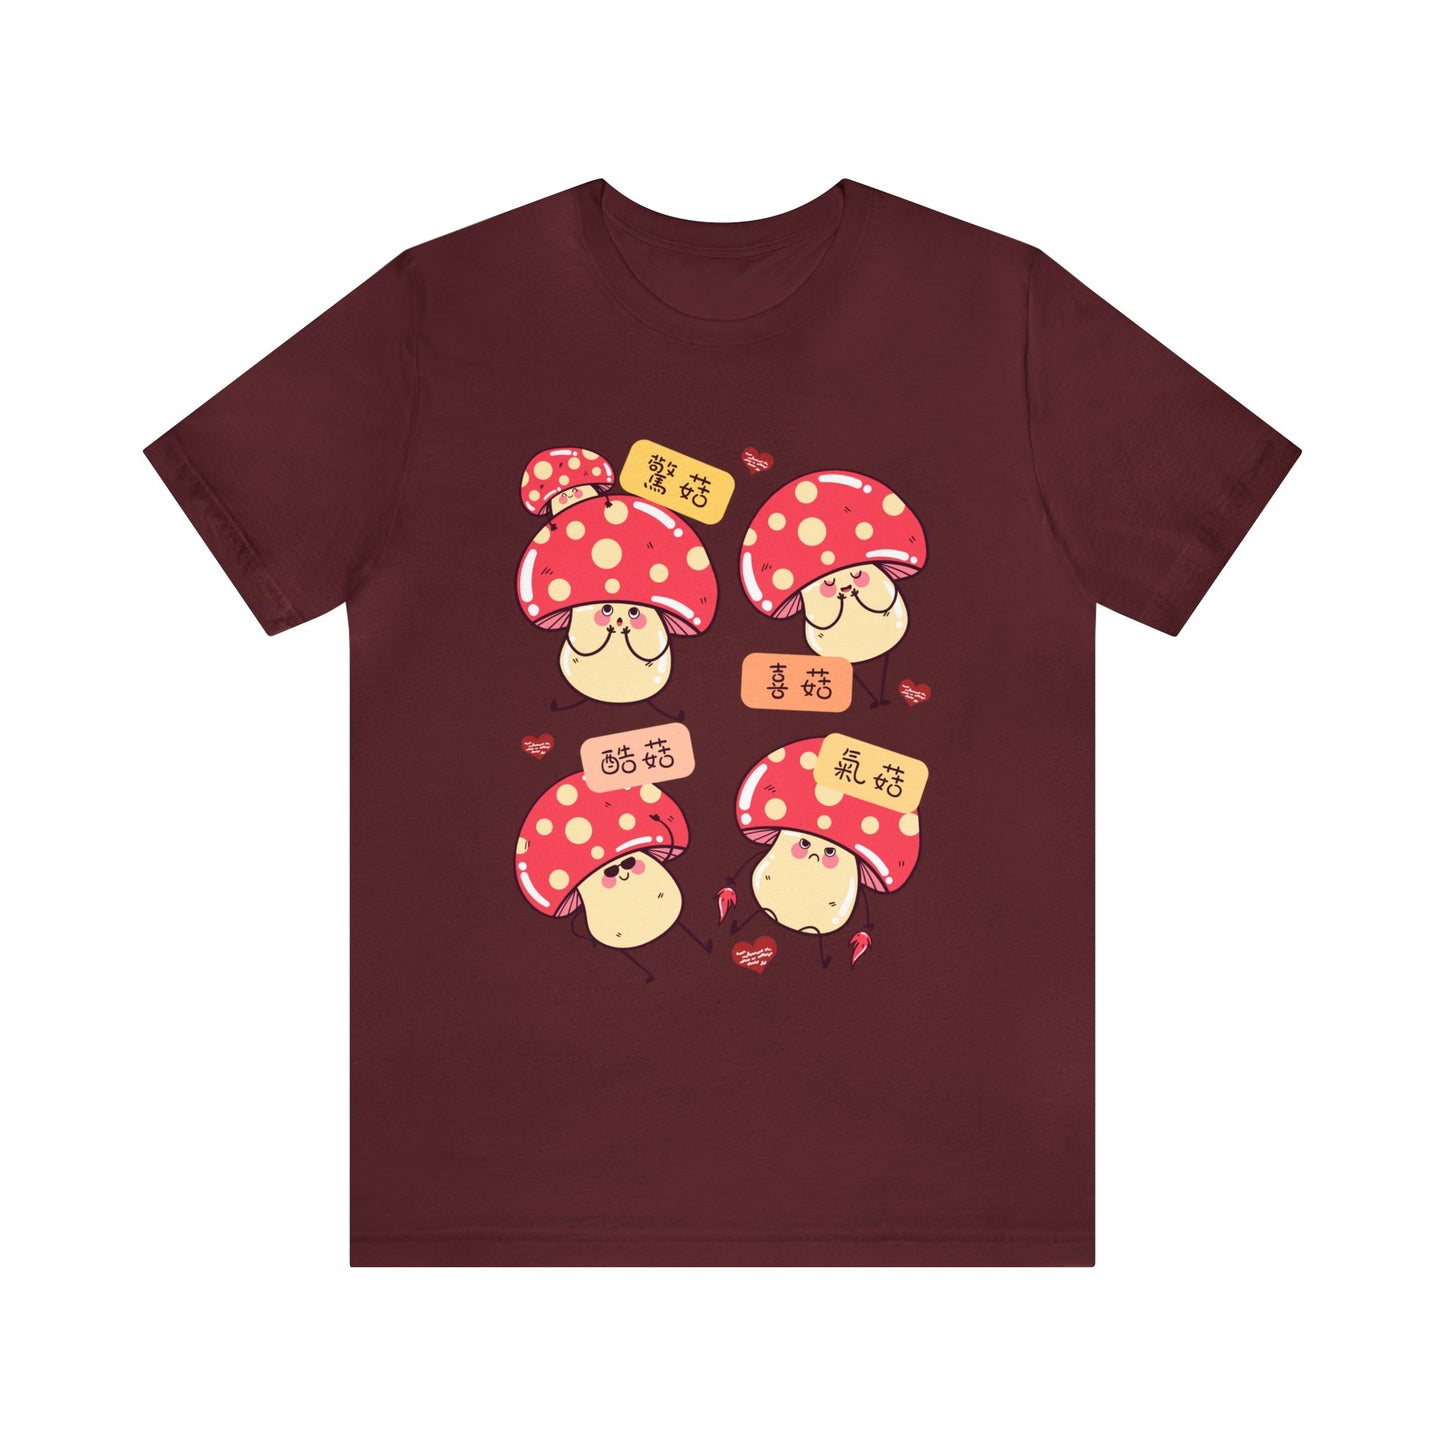 Unisex Oh Mushrooms Idioms T-shirts